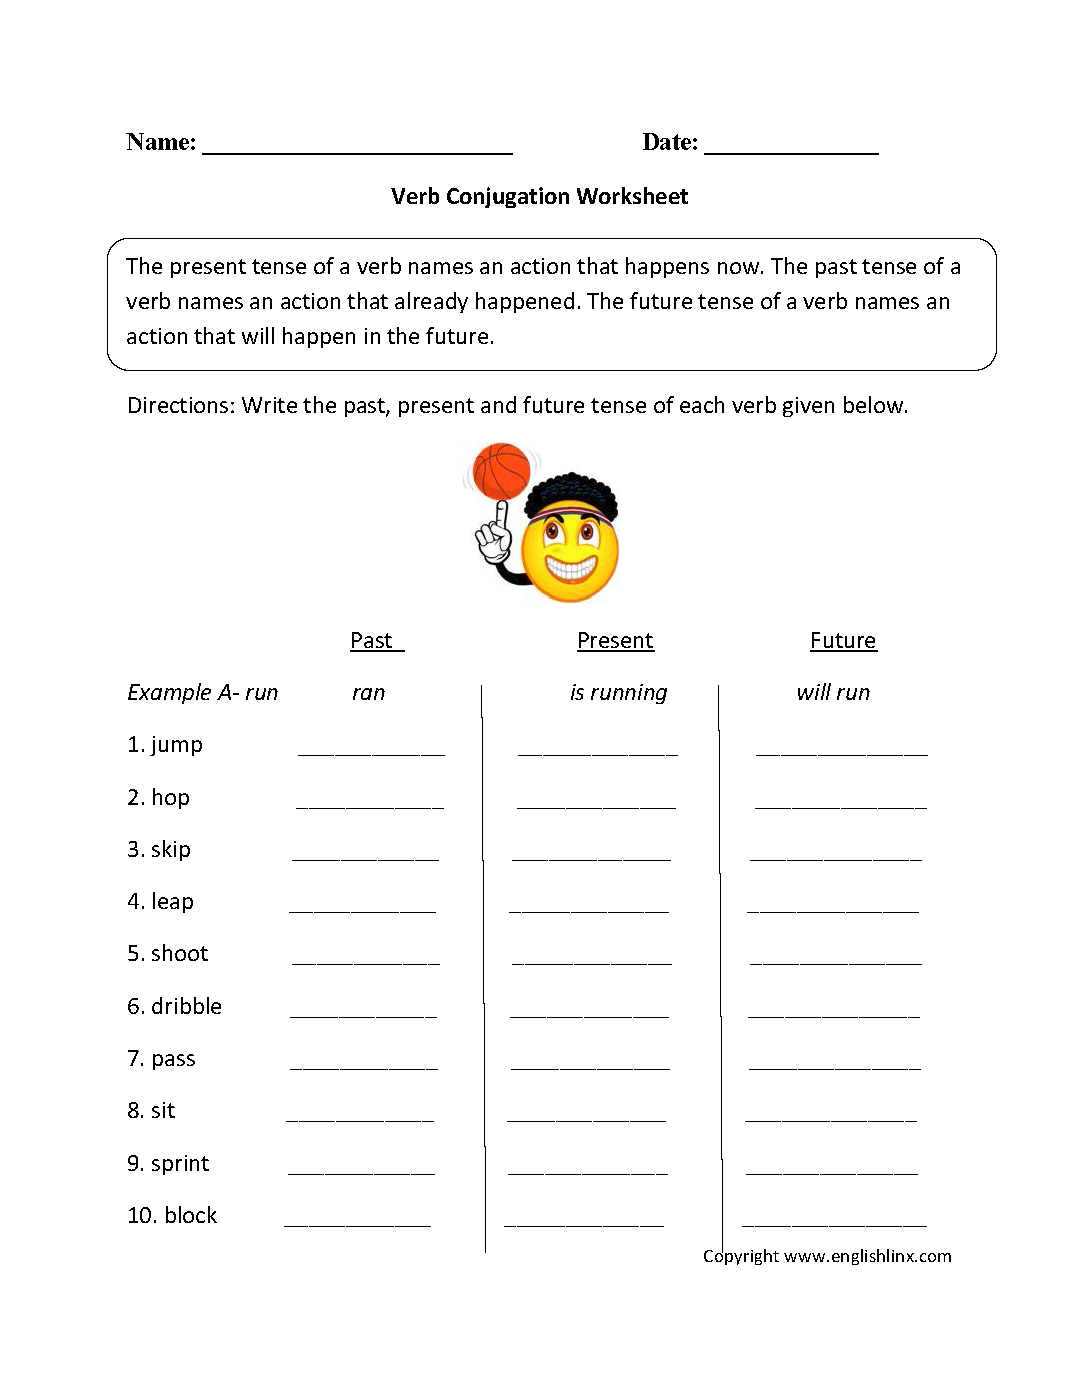 nouns-worksheets-and-printouts-free-printable-verb-worksheets-free-printable